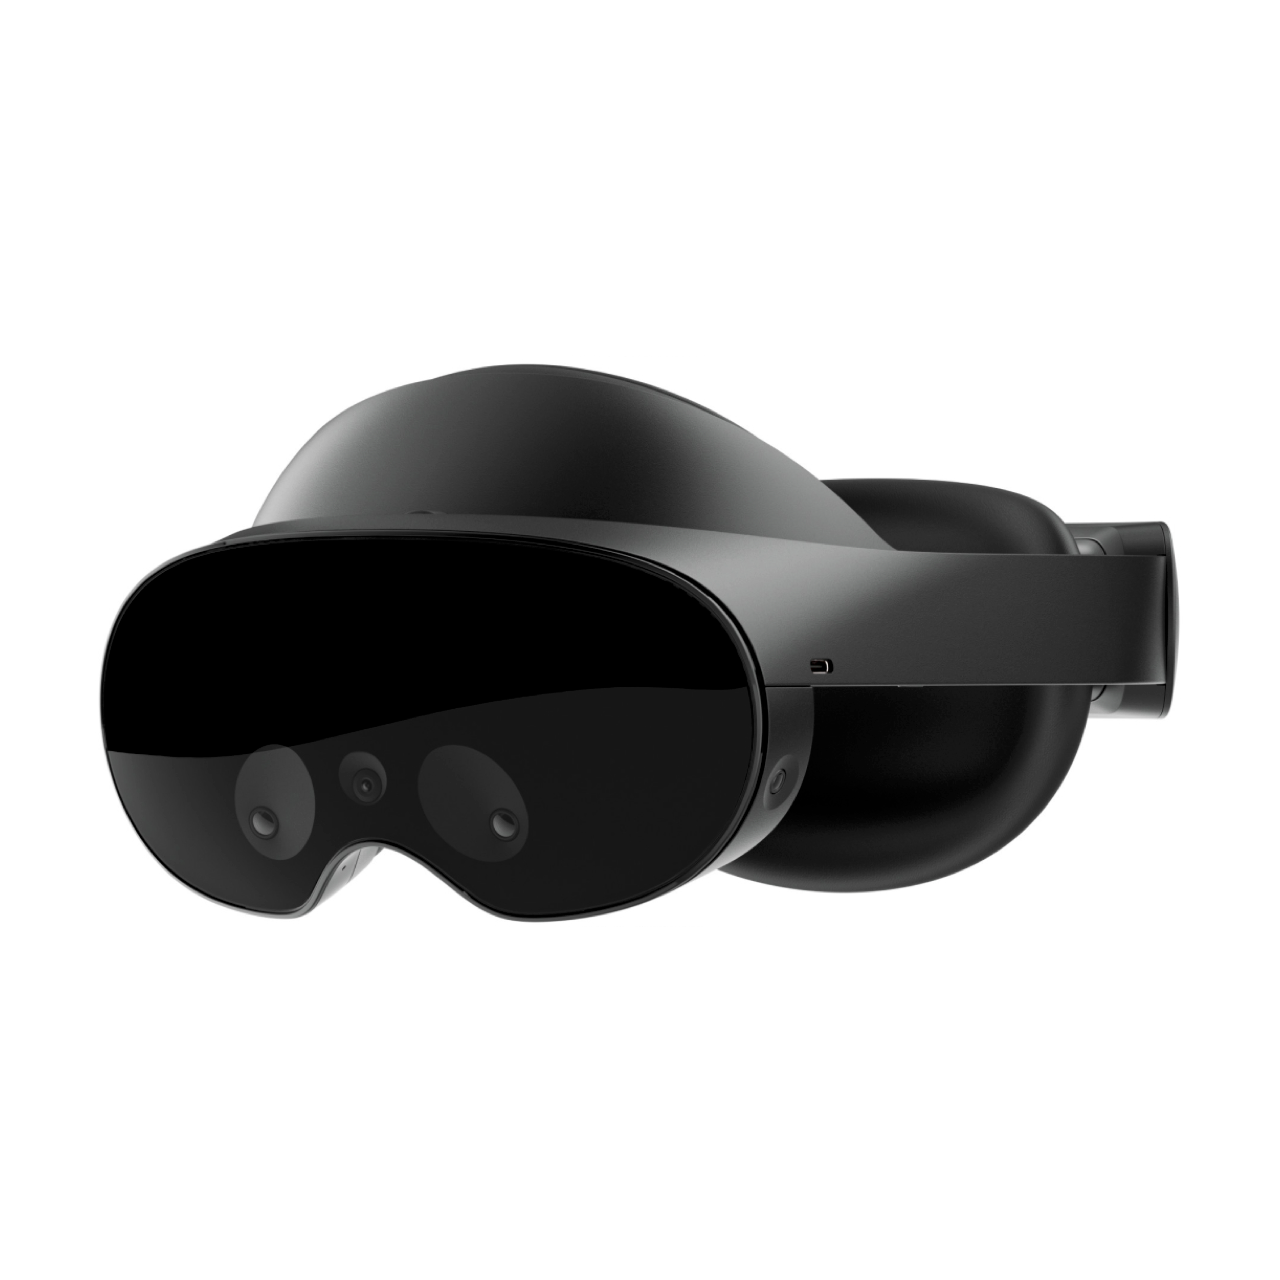 Meta / Oculus Quest Pro Virtual Reality Headset, 256GB